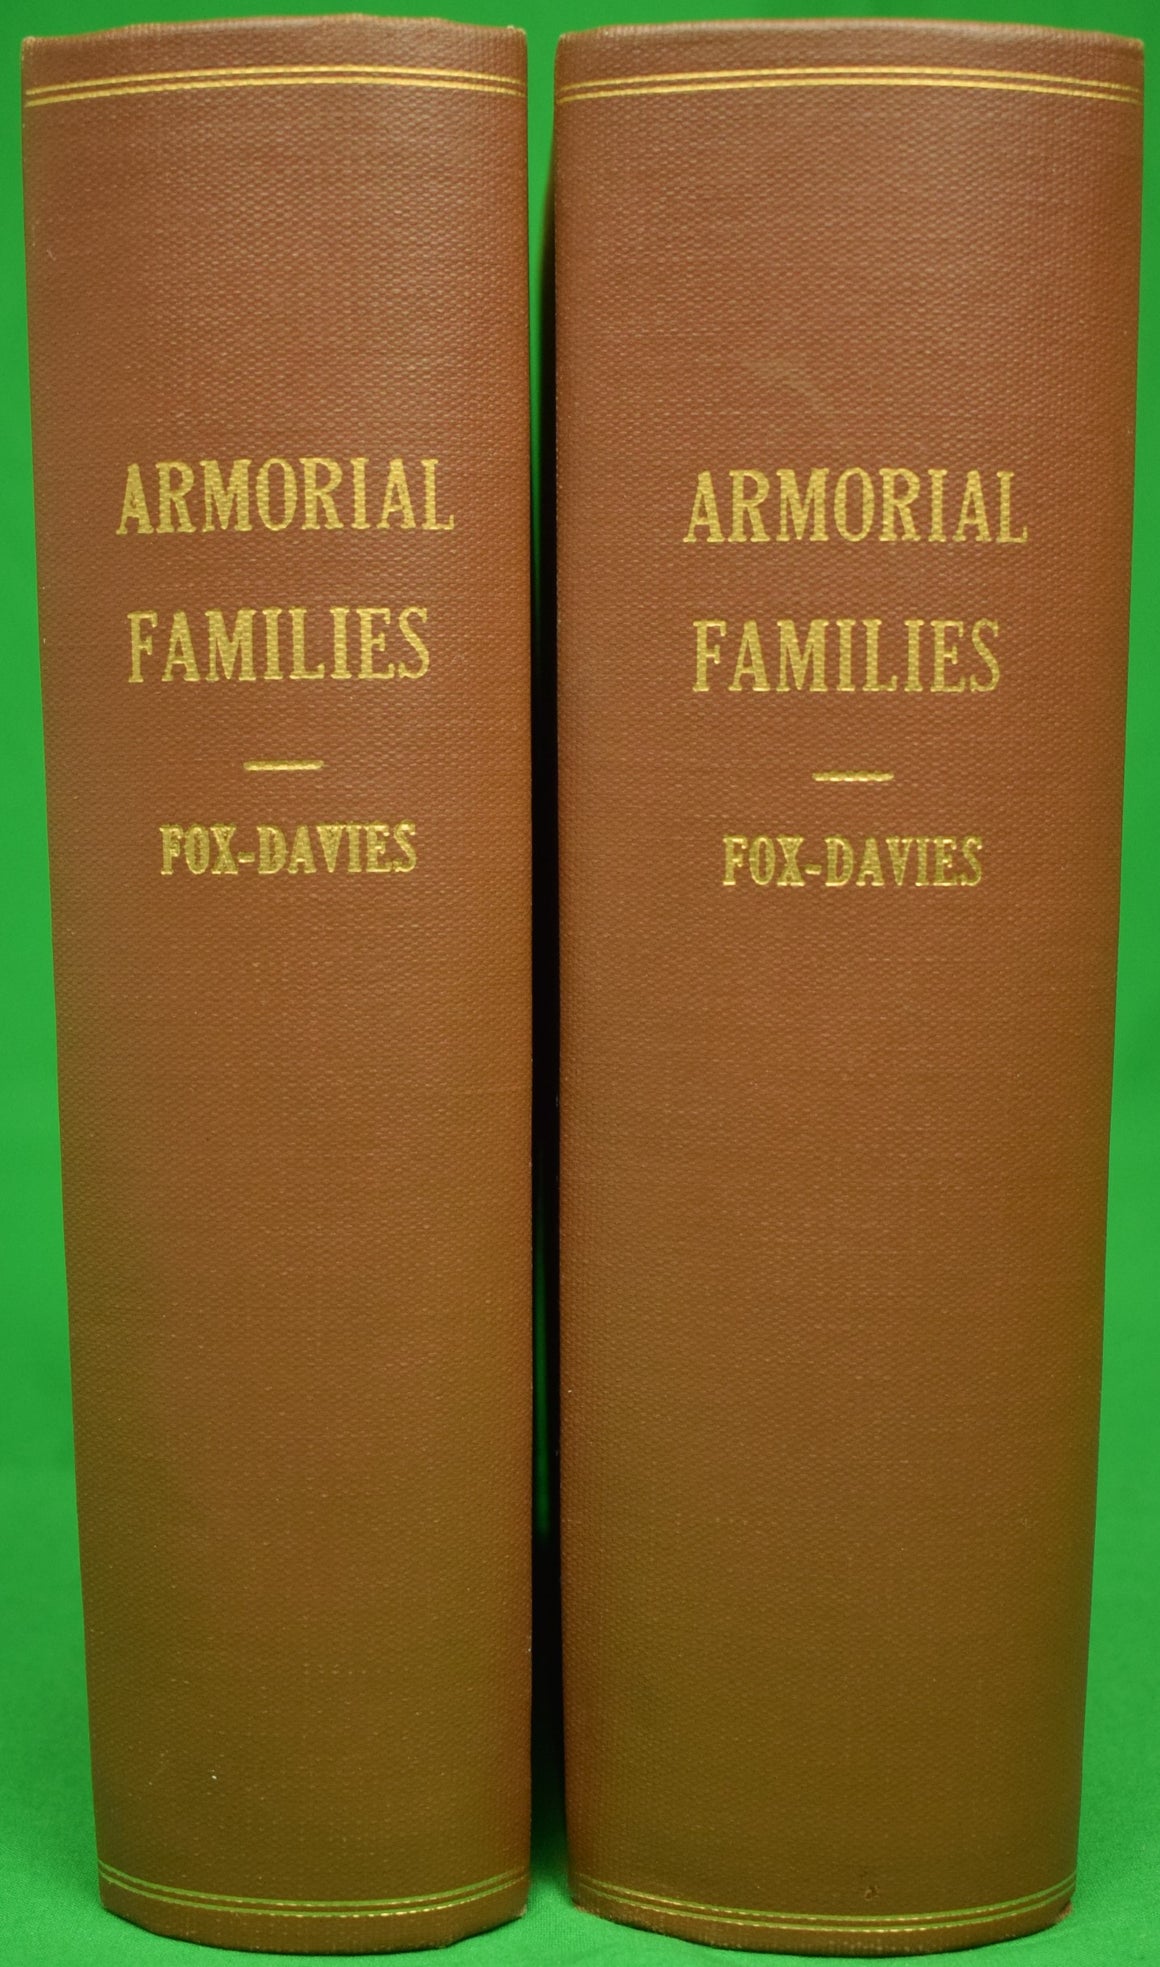 "Armorial Families A Directory Of Gentlemen Of Coat-Armour" 1929 FOX-DAVIES, Arthur Charles